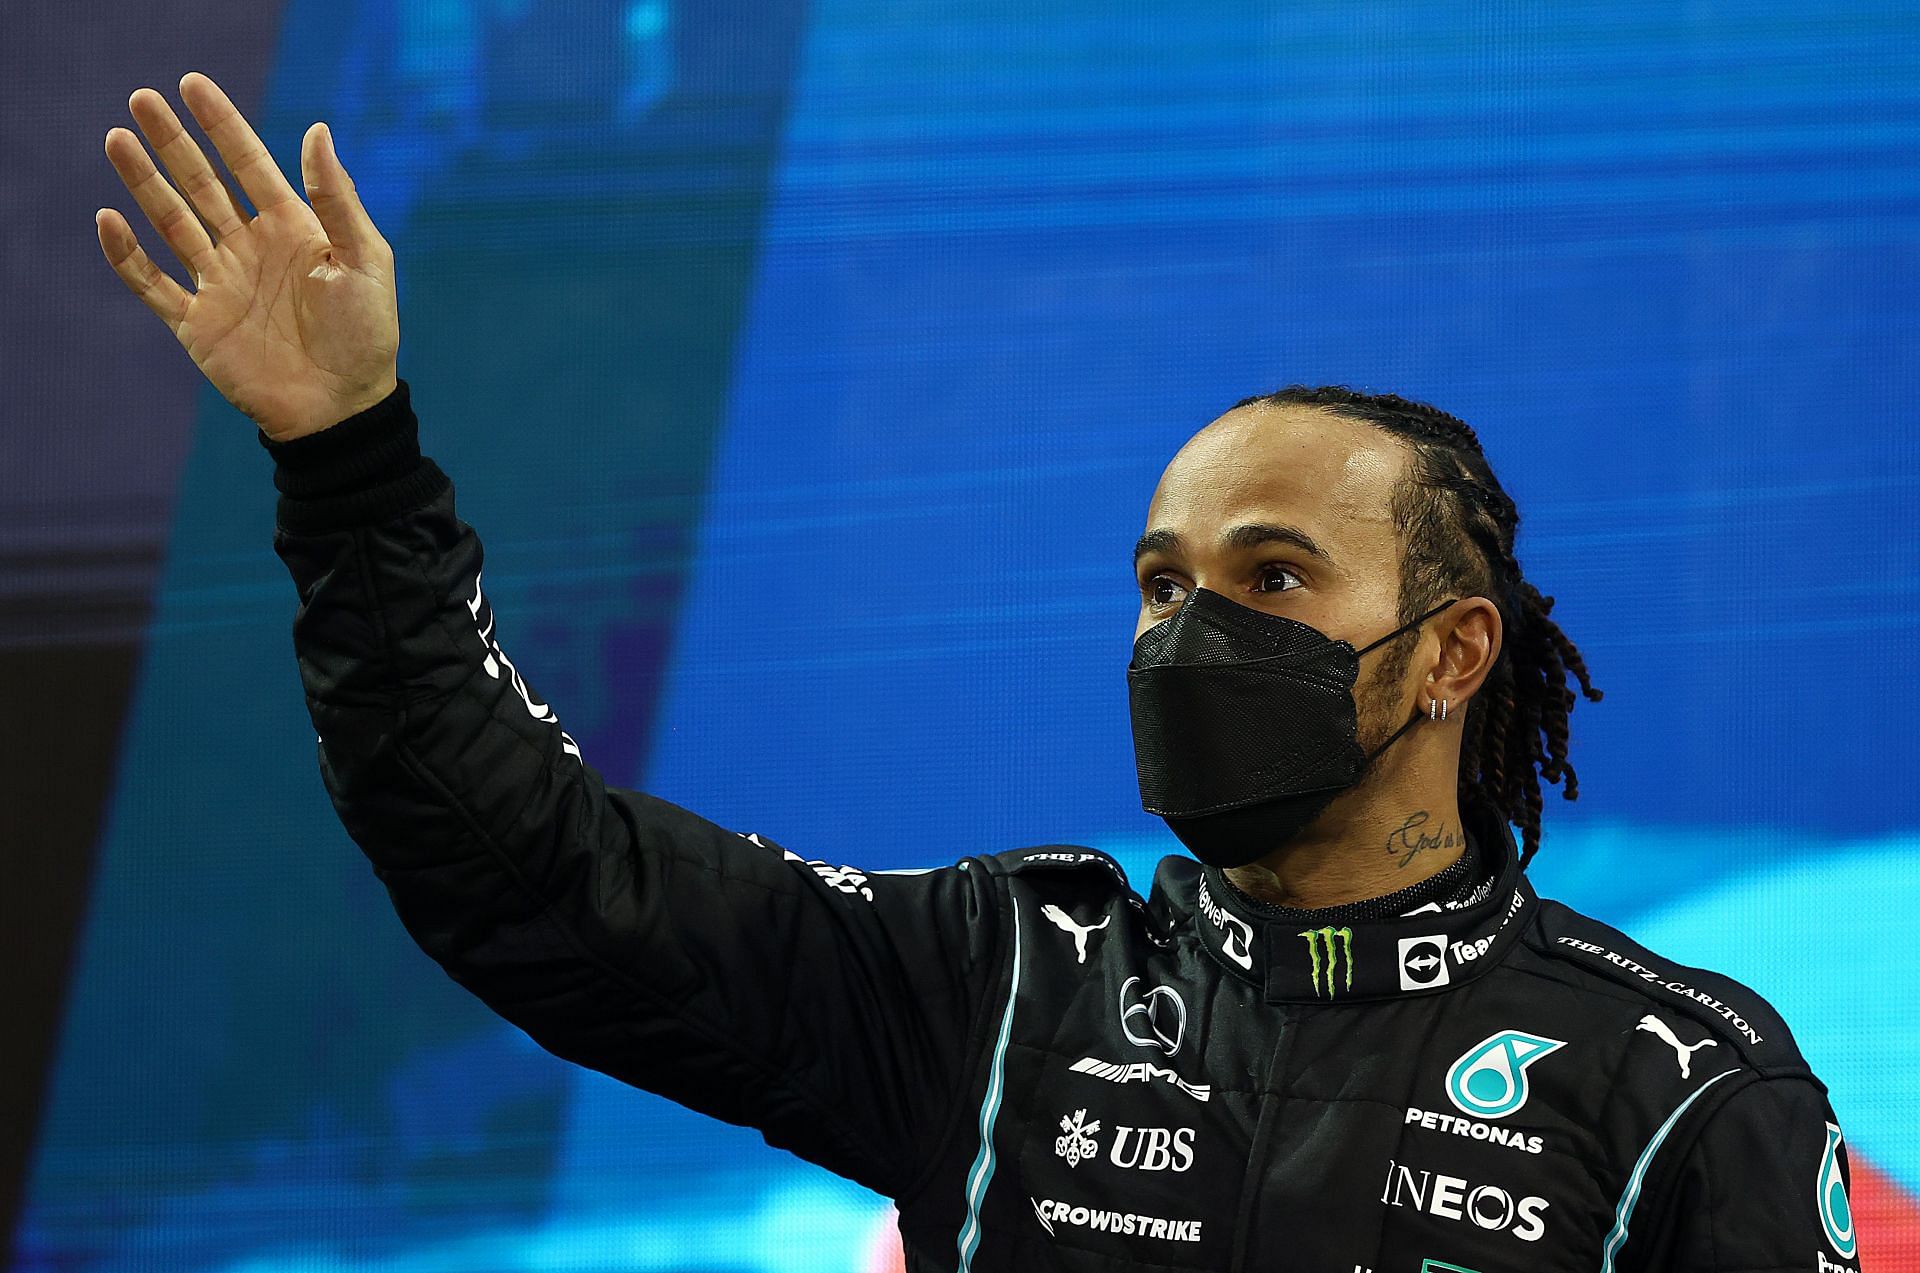 F1 Grand Prix of Abu Dhabi - Lewis Hamilton waves to the crowd